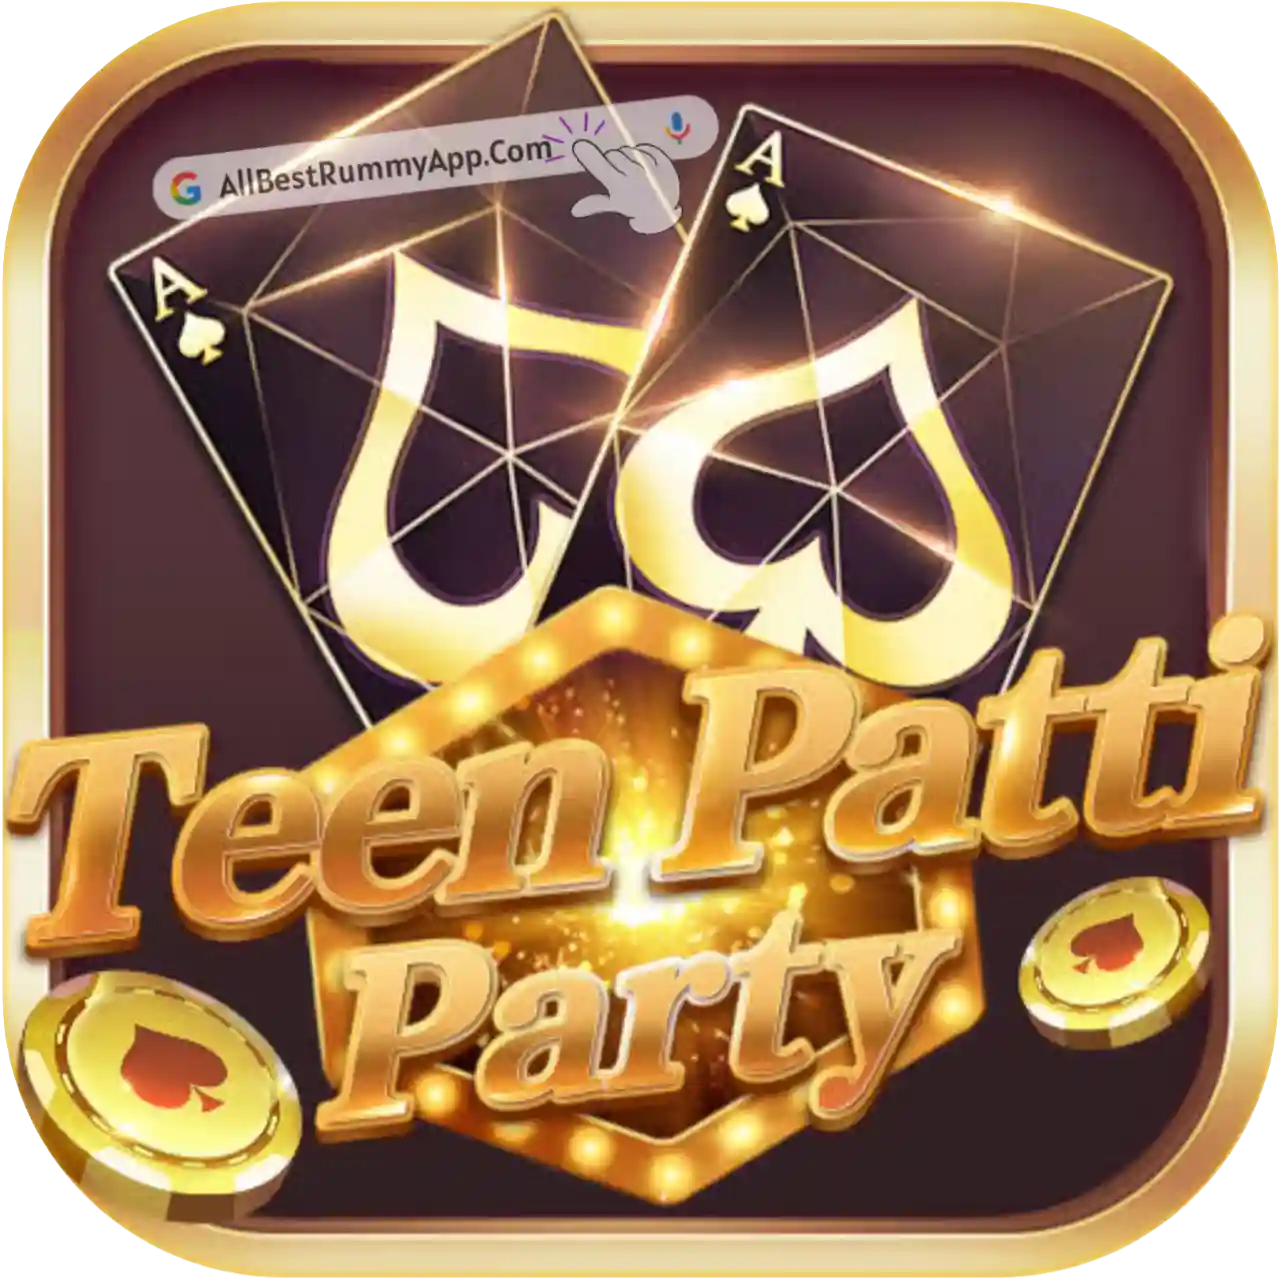 Teen Patti Party - All Best Rummy App